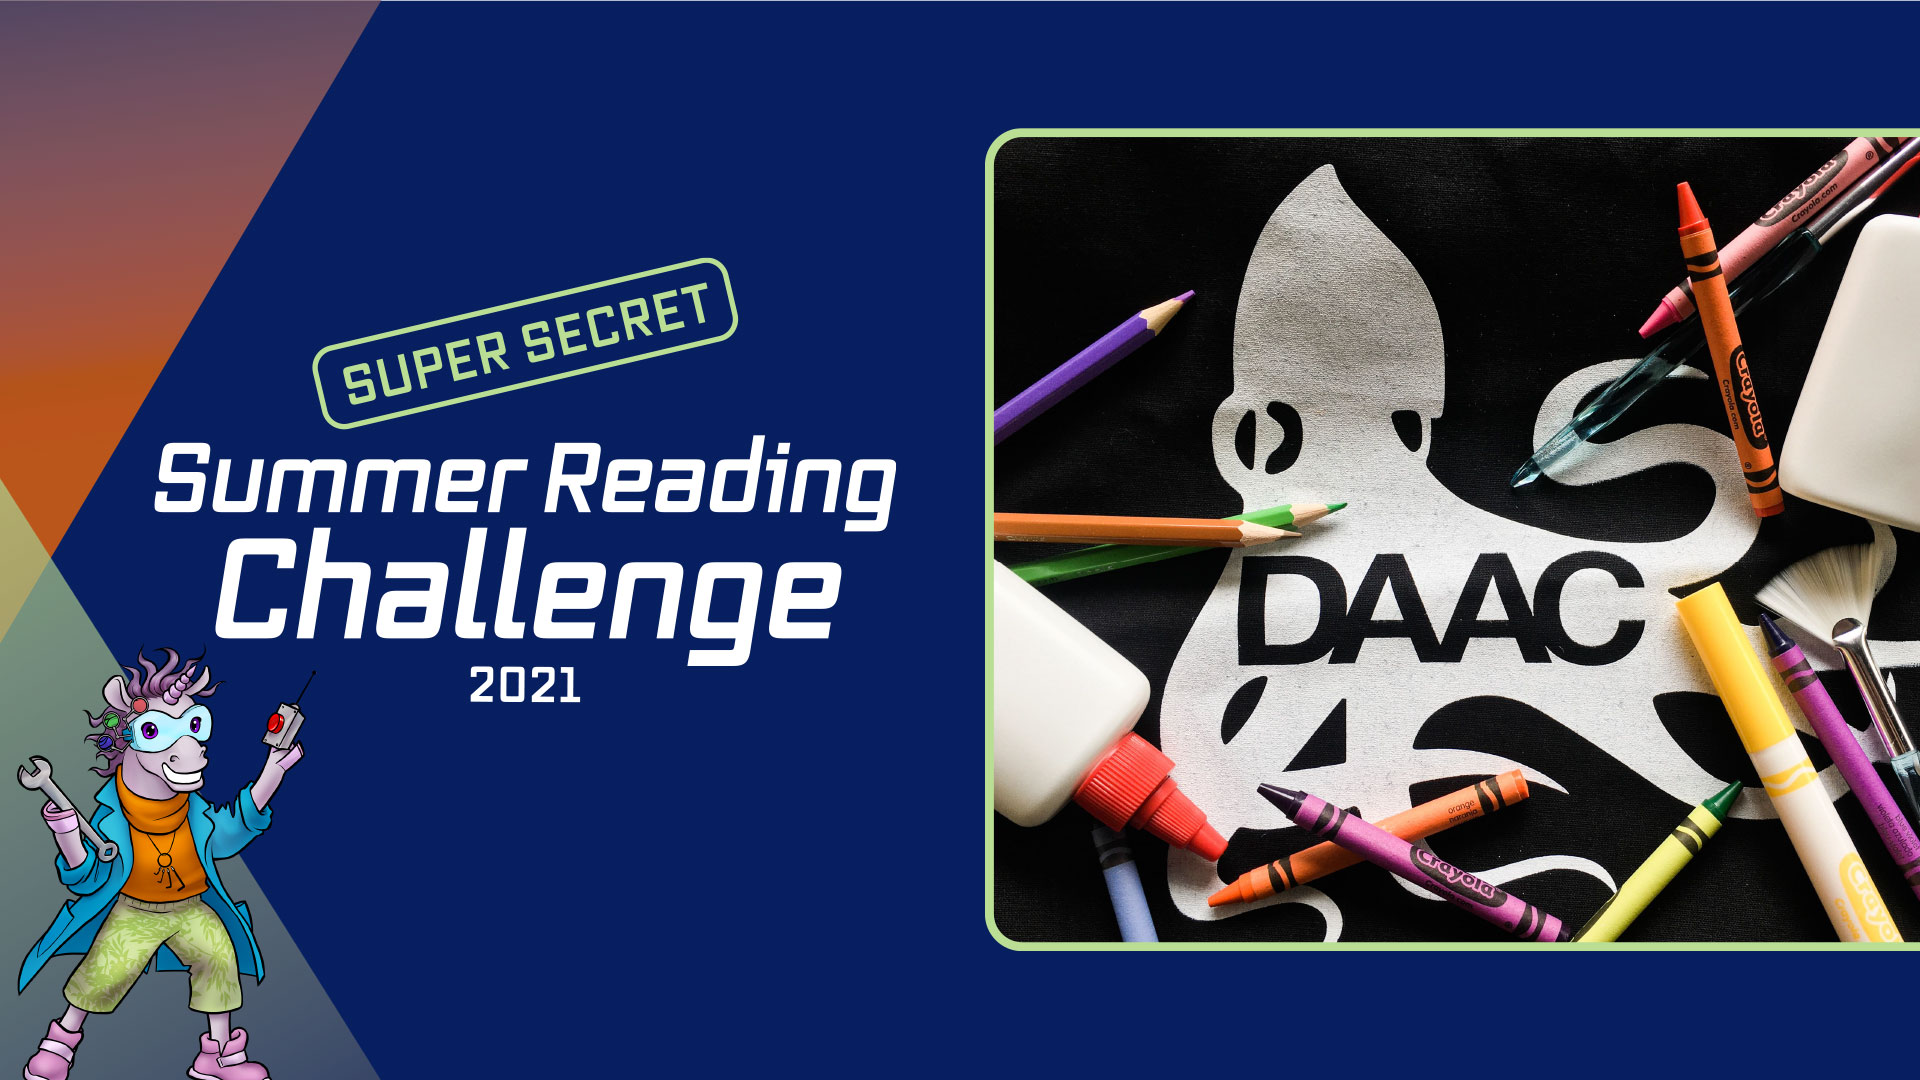 Super Secret Summer Reading Challenge 2021 - DAAC